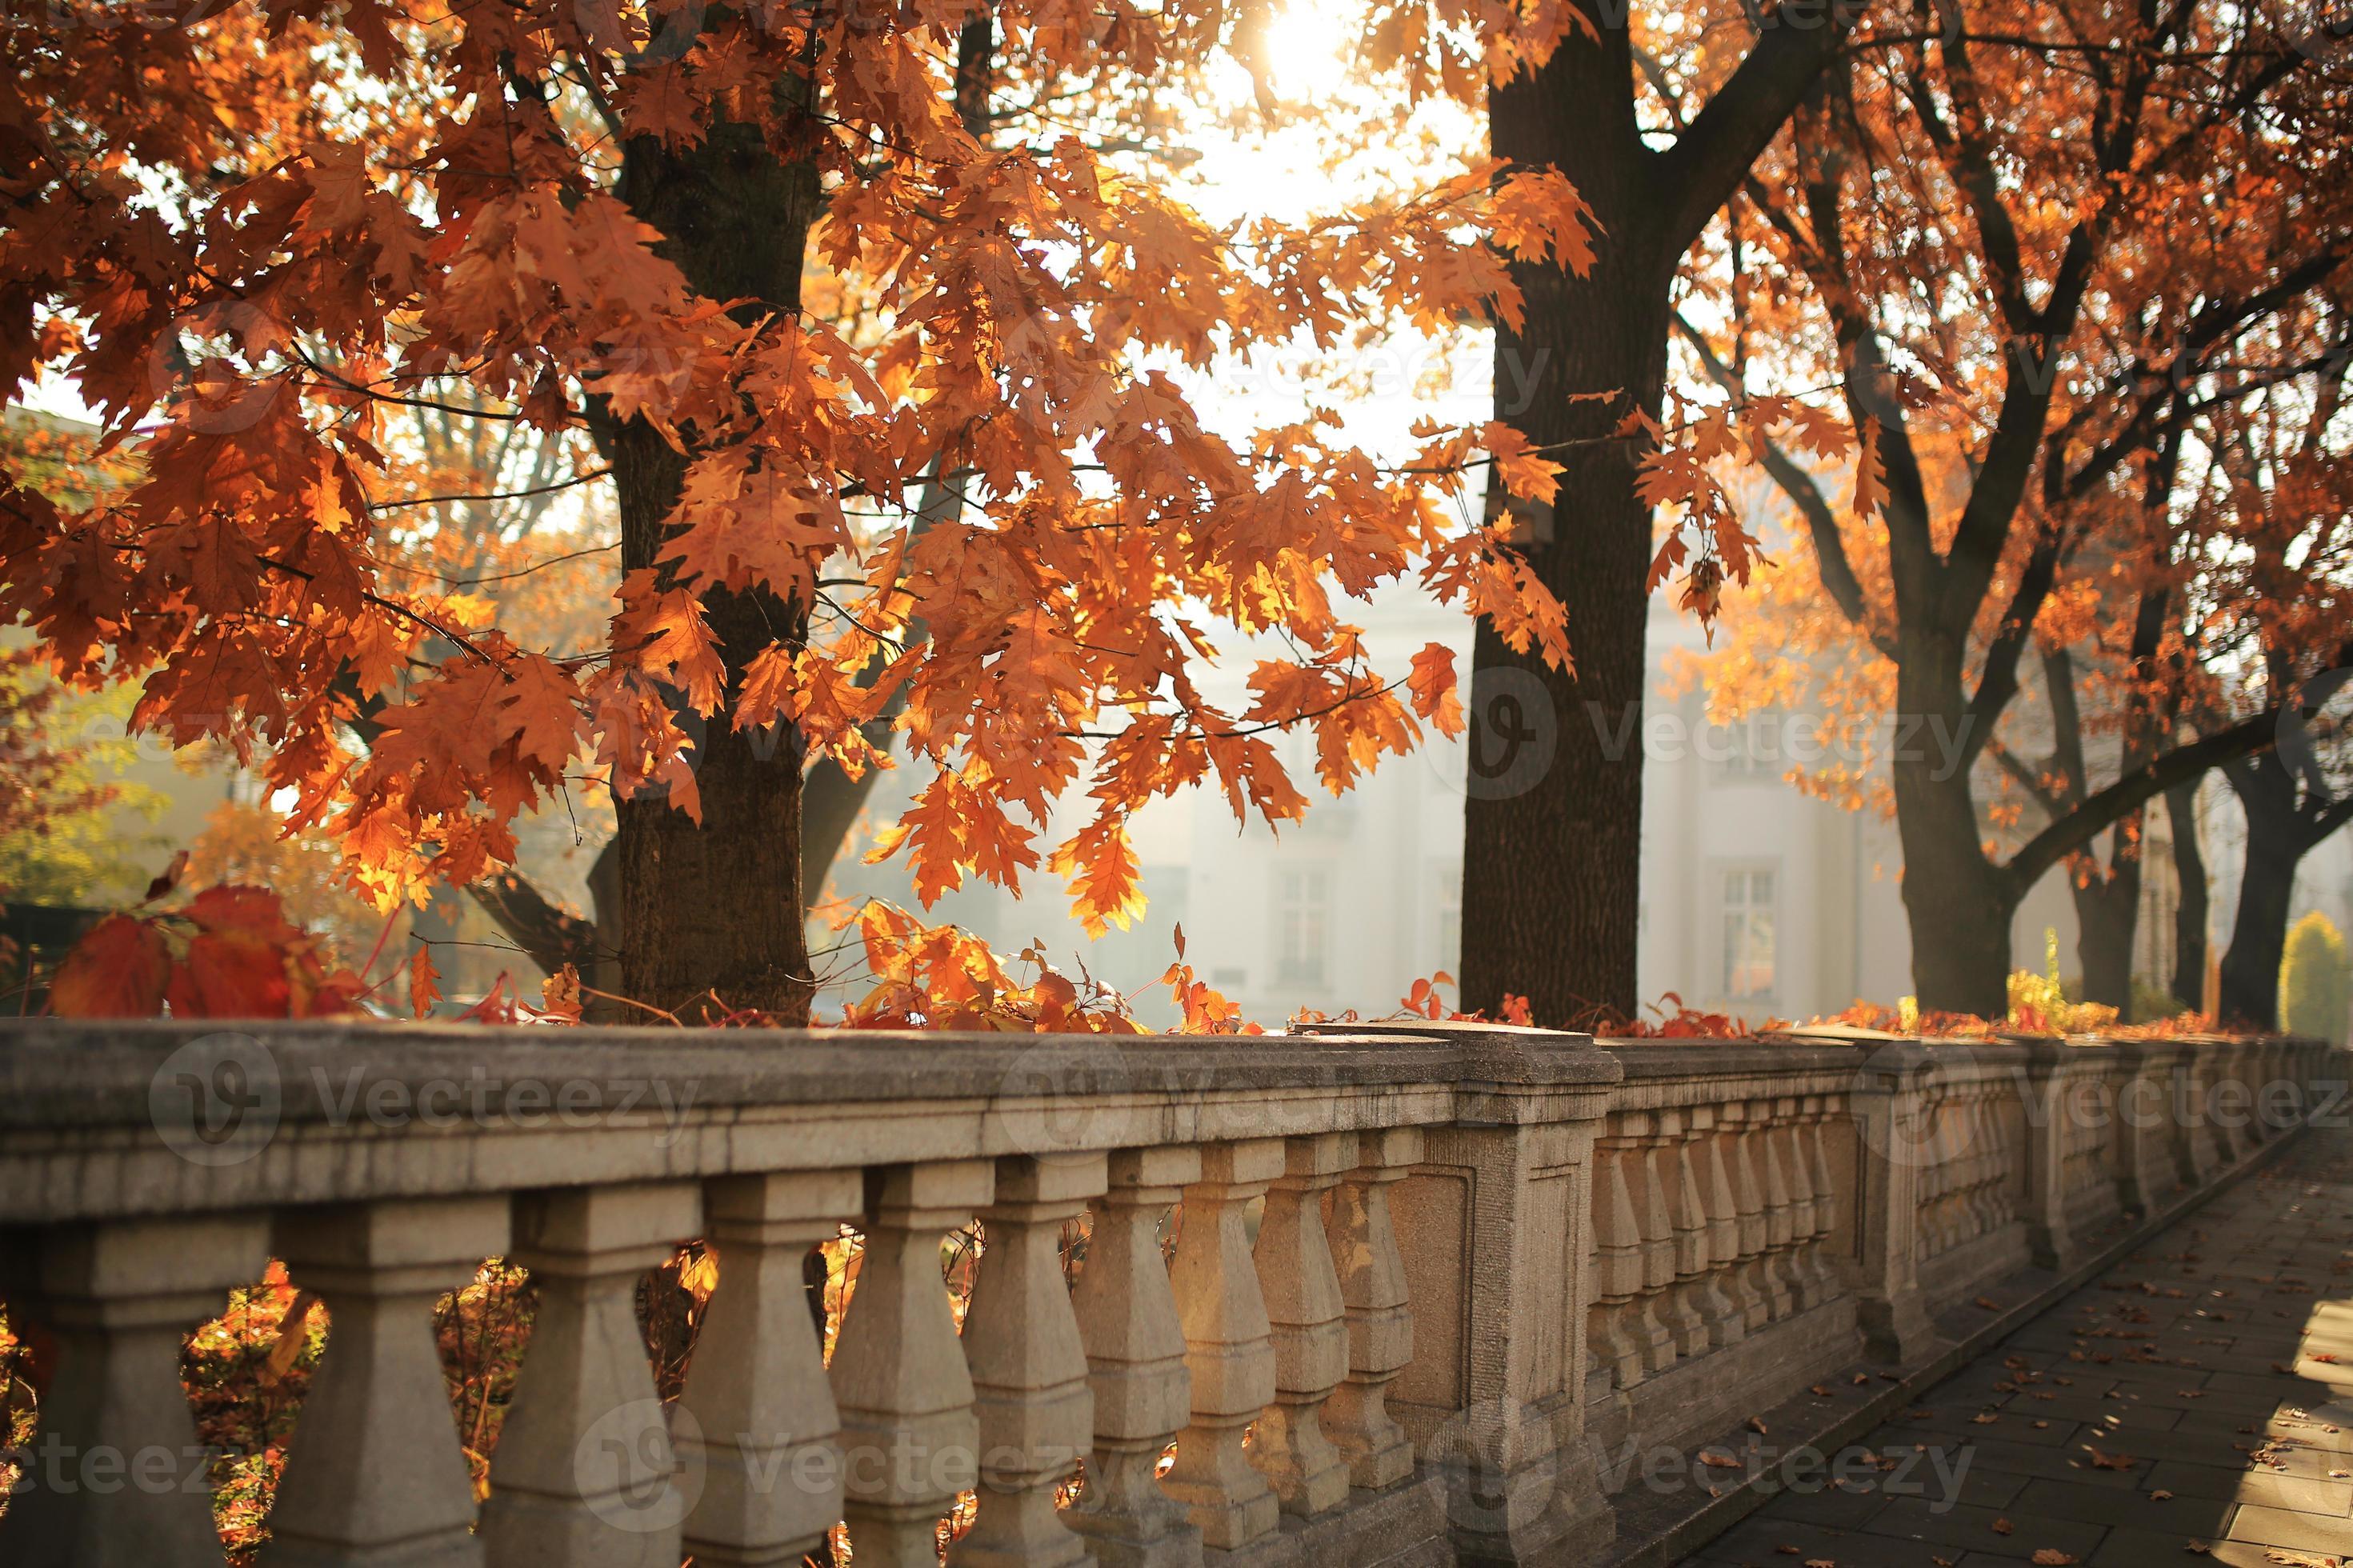 Autumn landscape, autumn city park with fallen yellow autumn leaves and autumn trees